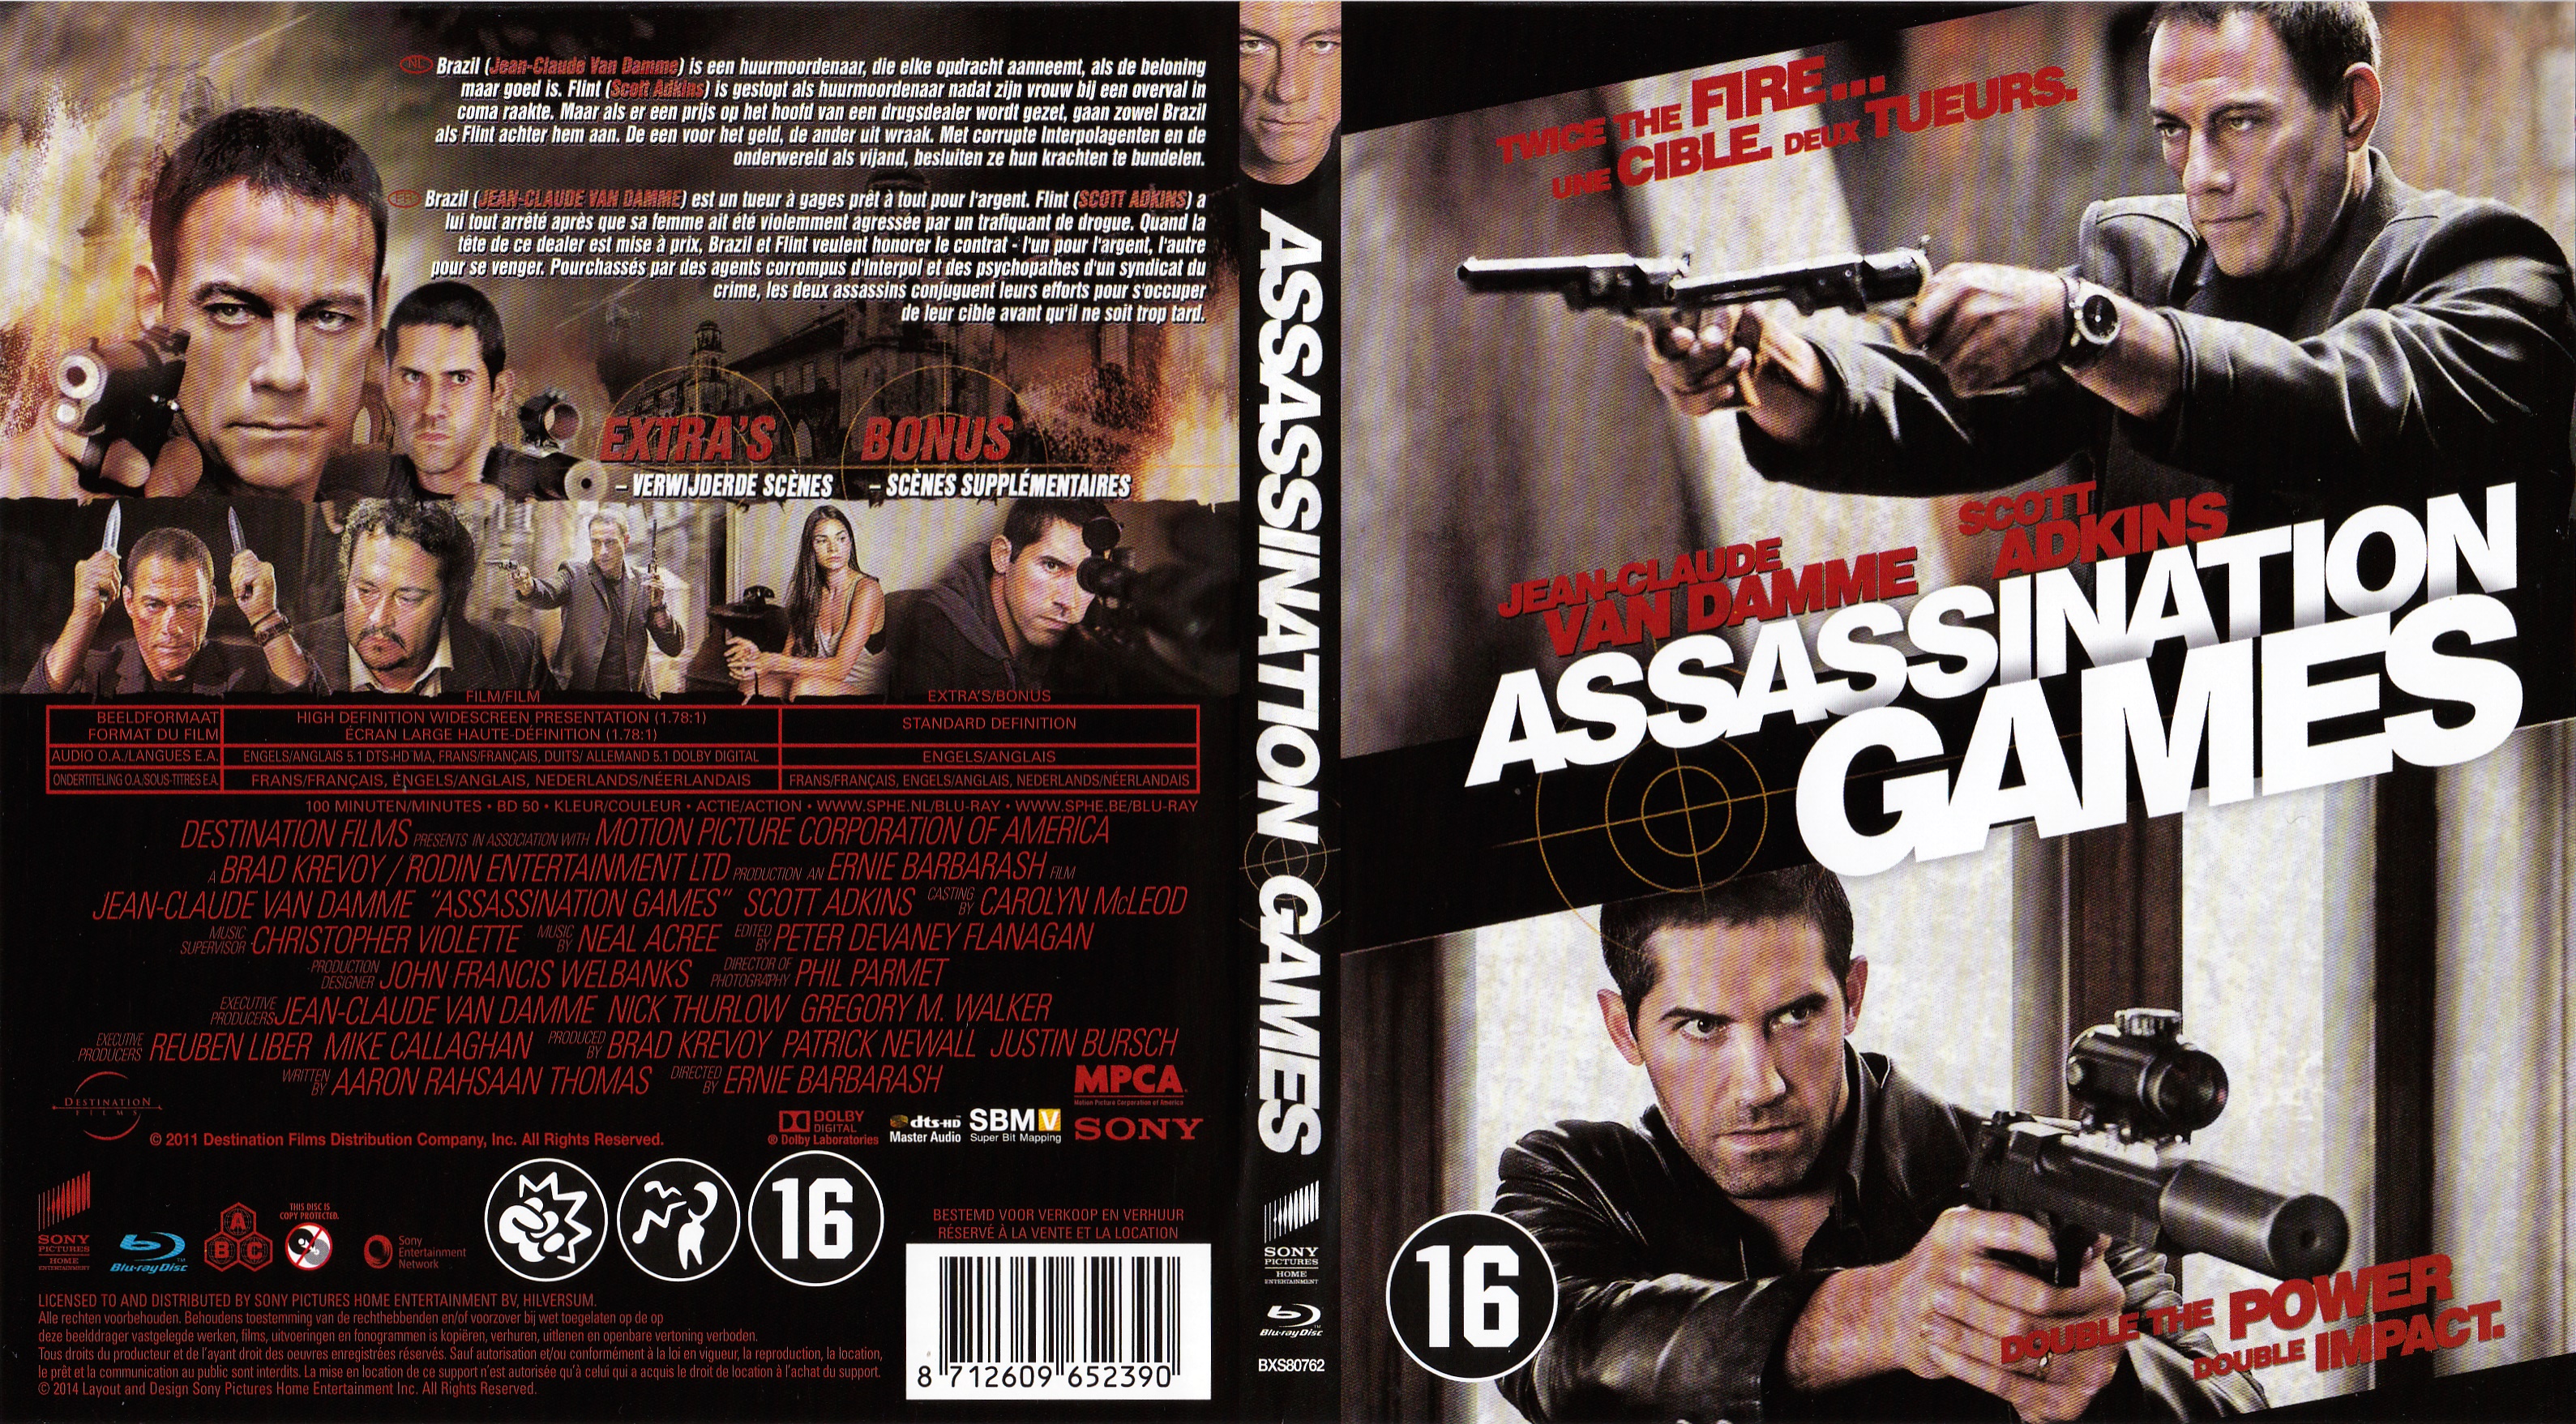 Jaquette DVD Assassination games (BLU-RAY) v2